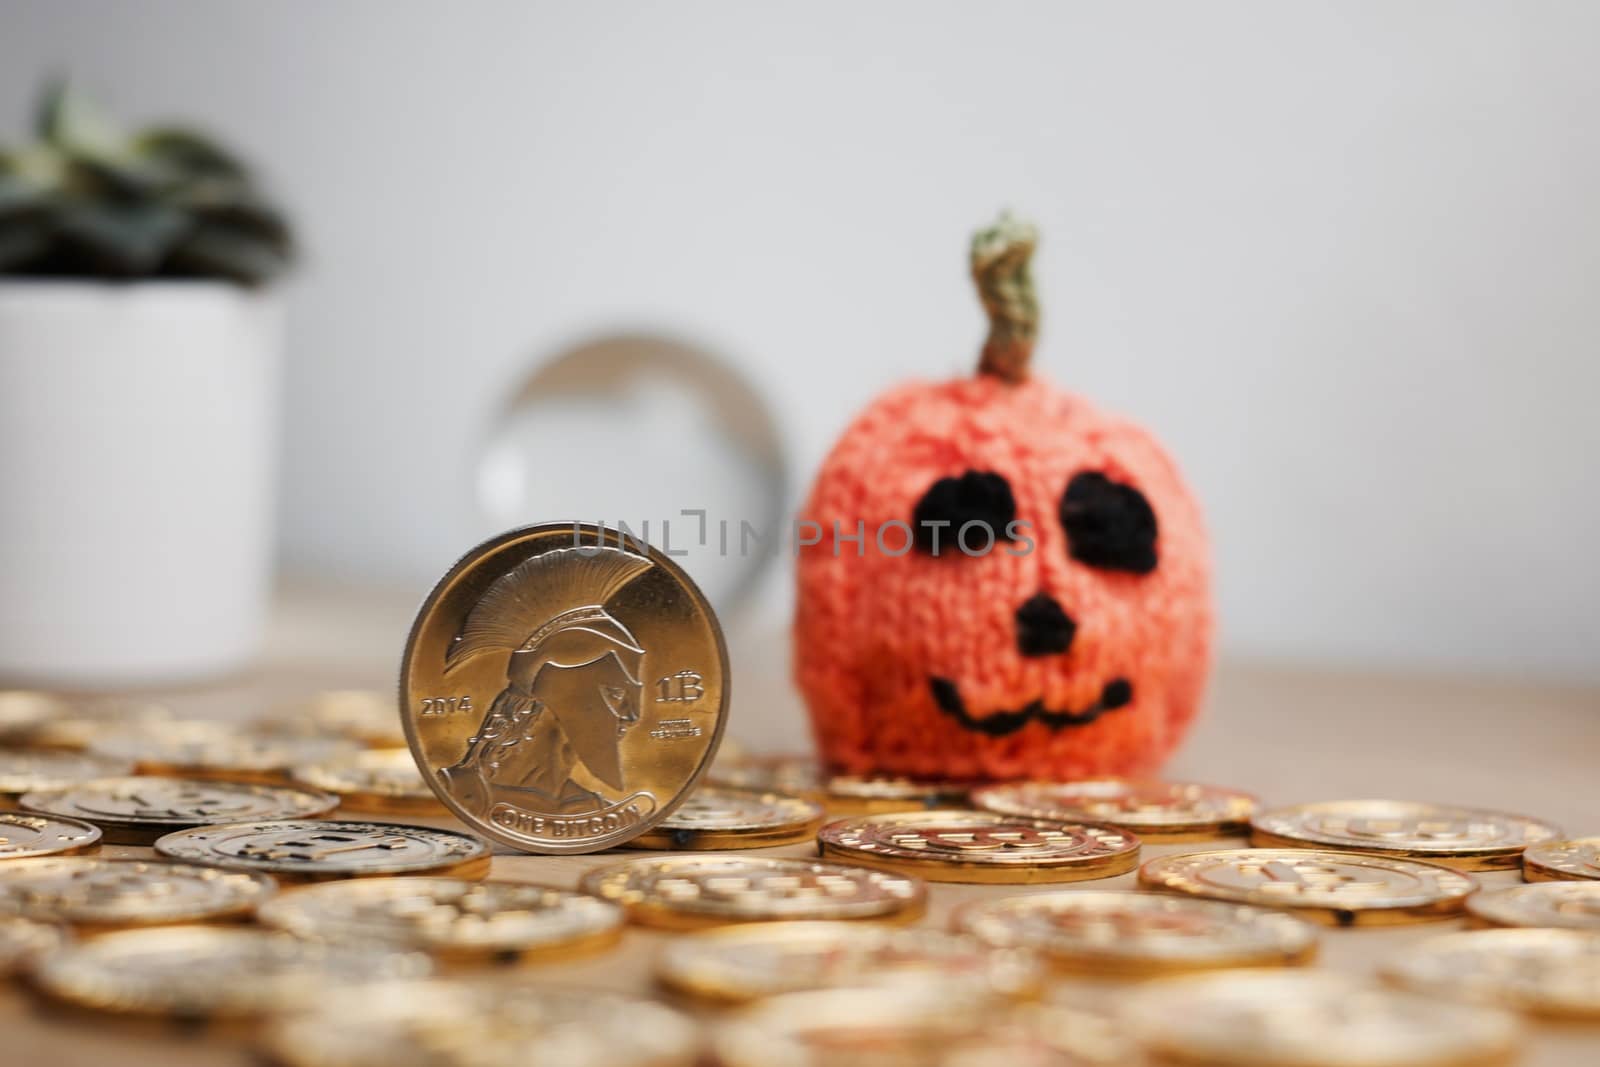 Digital currency physical metal bitcoin coin. Halloween pumpkin concept.